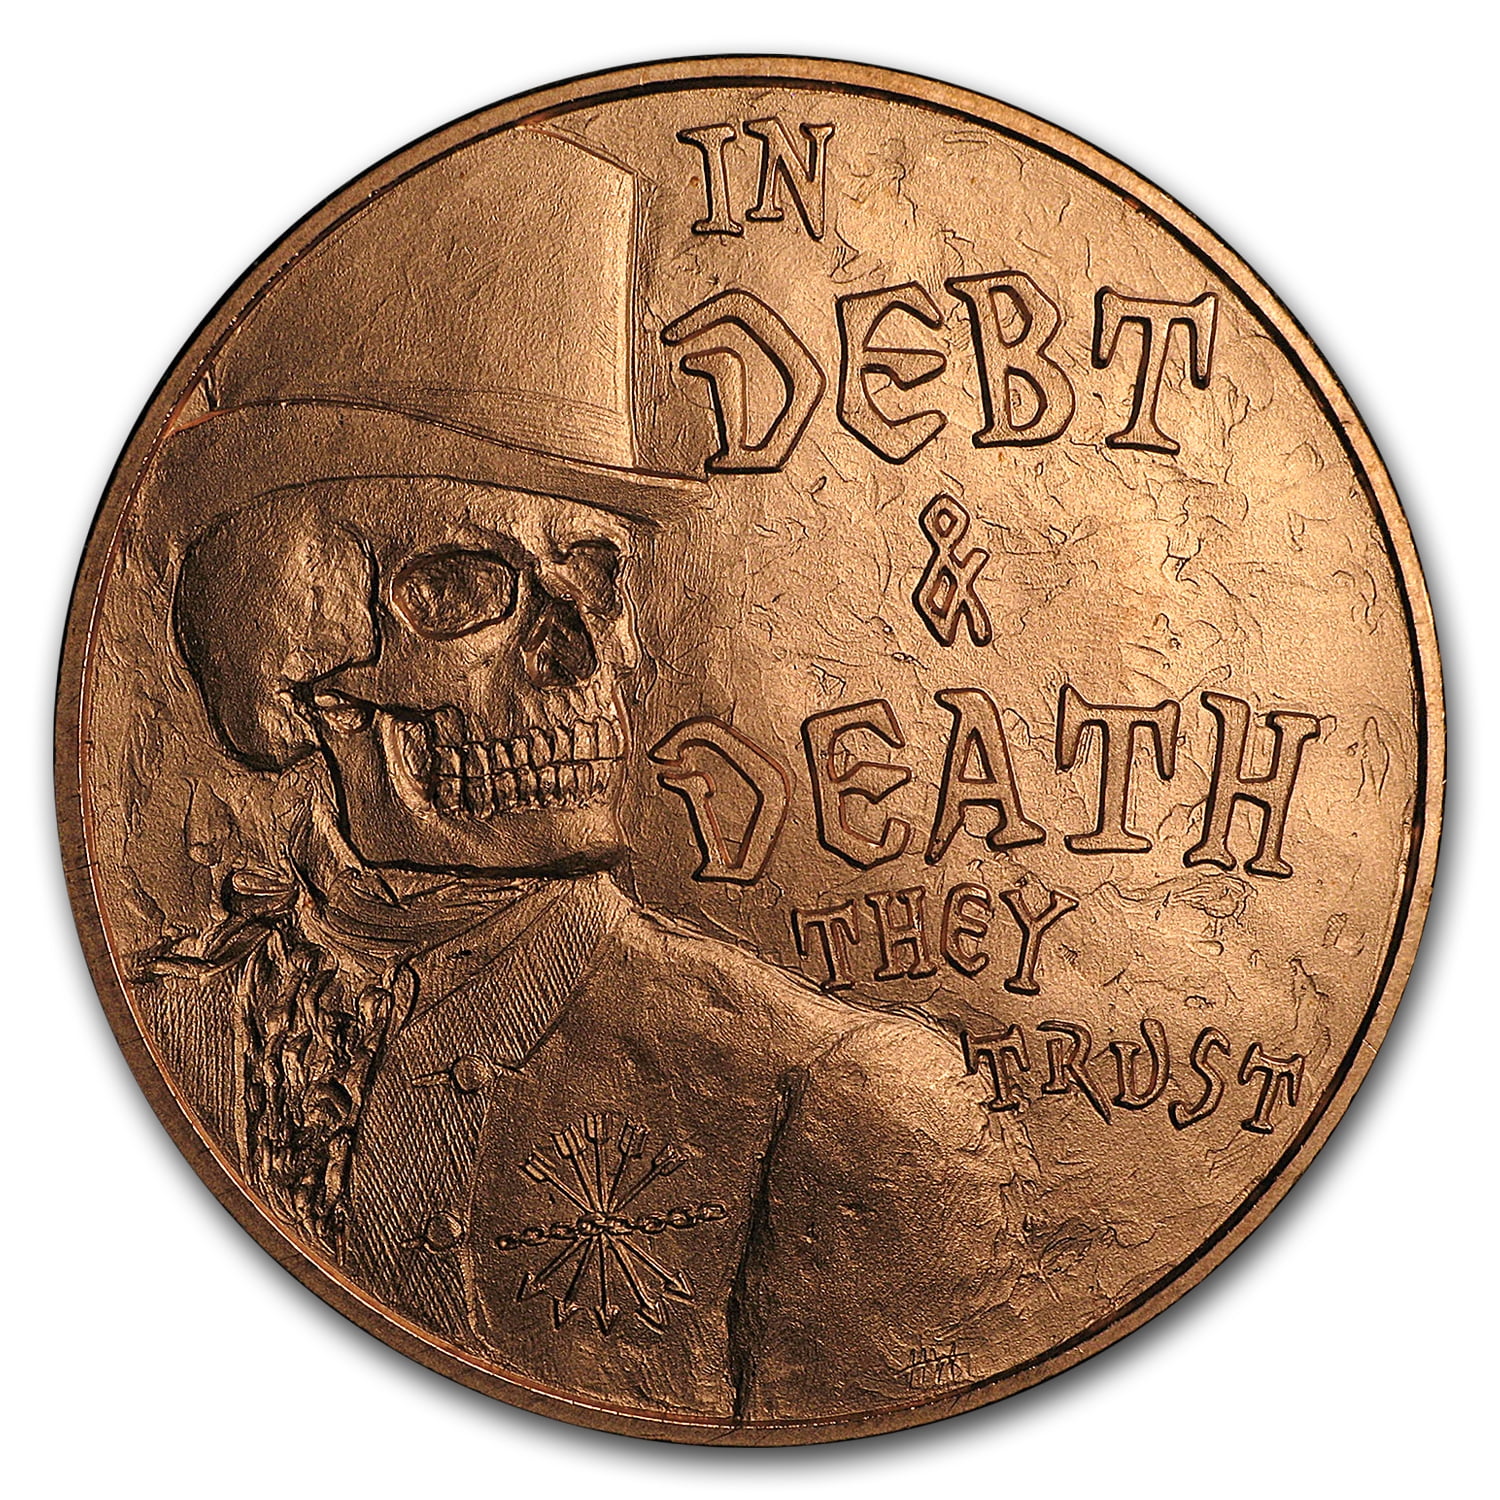 DEBT & DEATH They Trust   1 oz Copper Round # 23  MINI MINTAGE  Silver Shield 